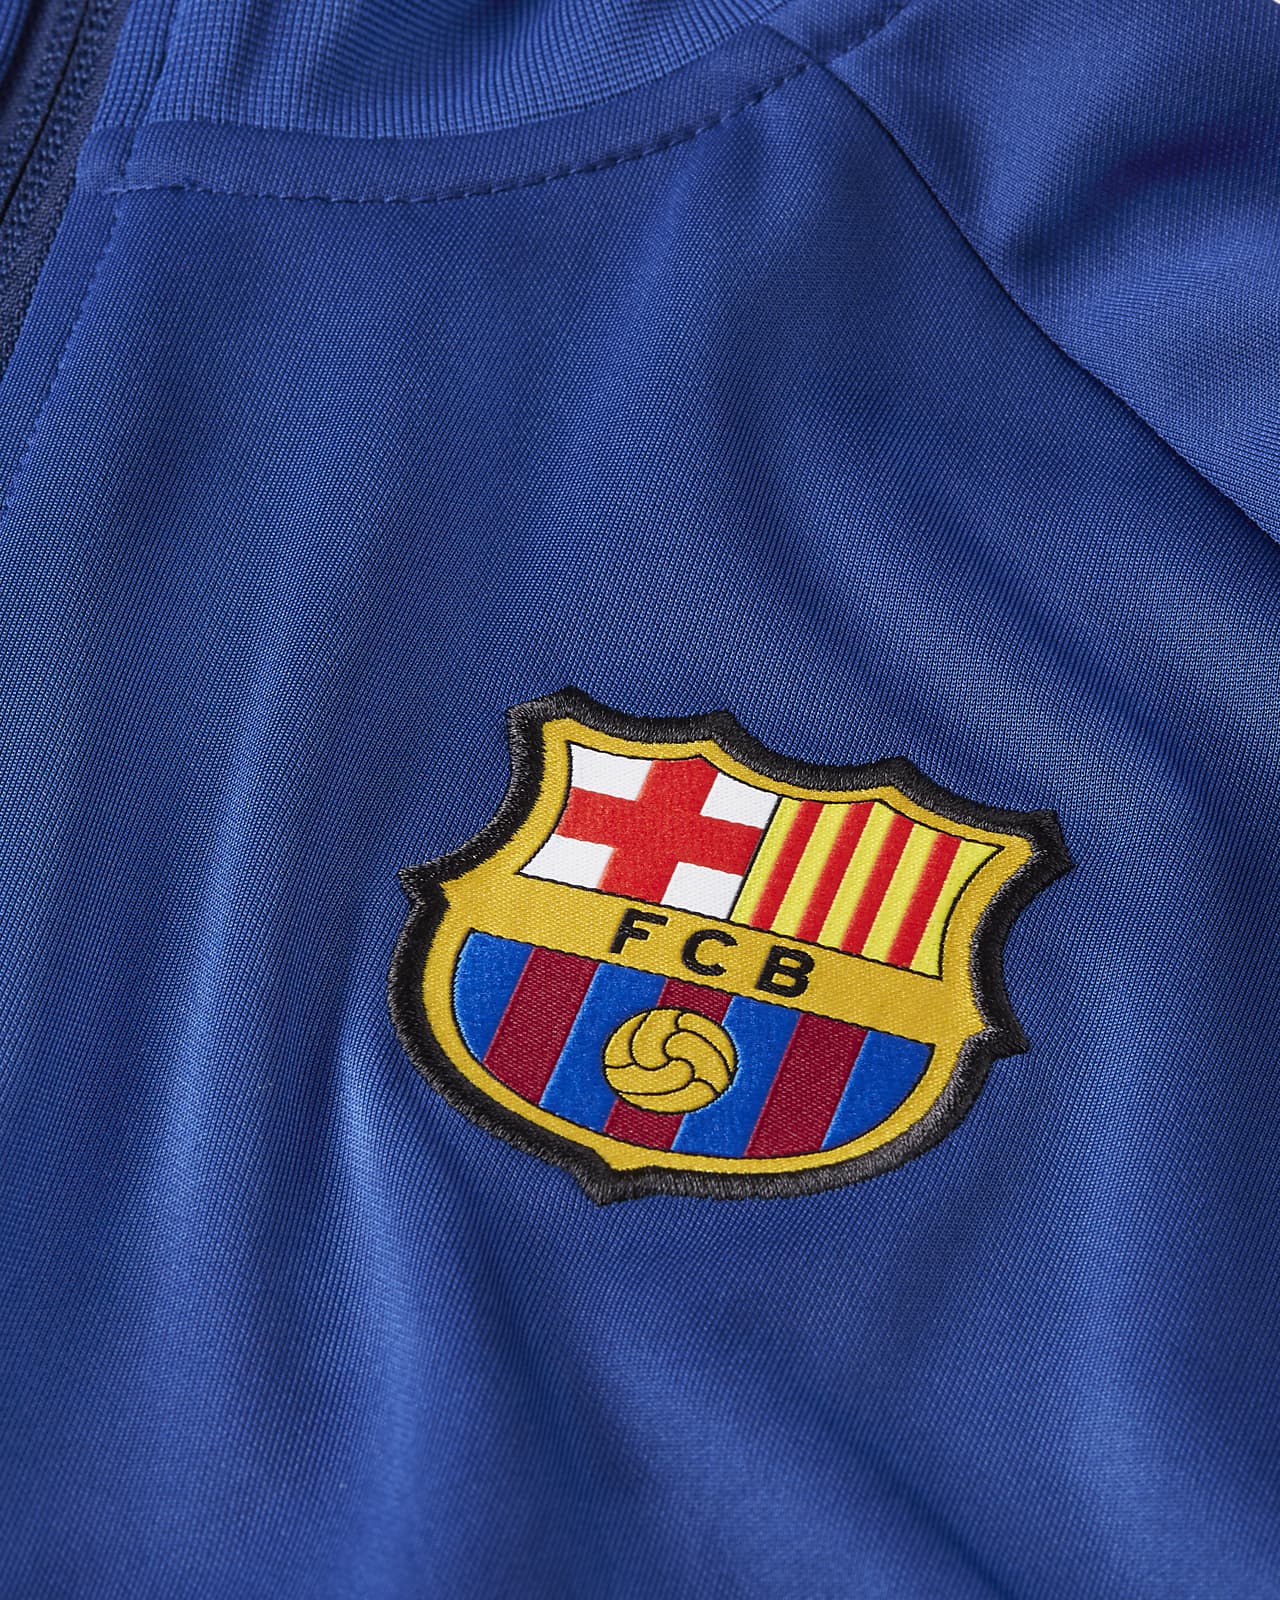 FC Barcelona Men's Soccer Track Jacket. Nike JP